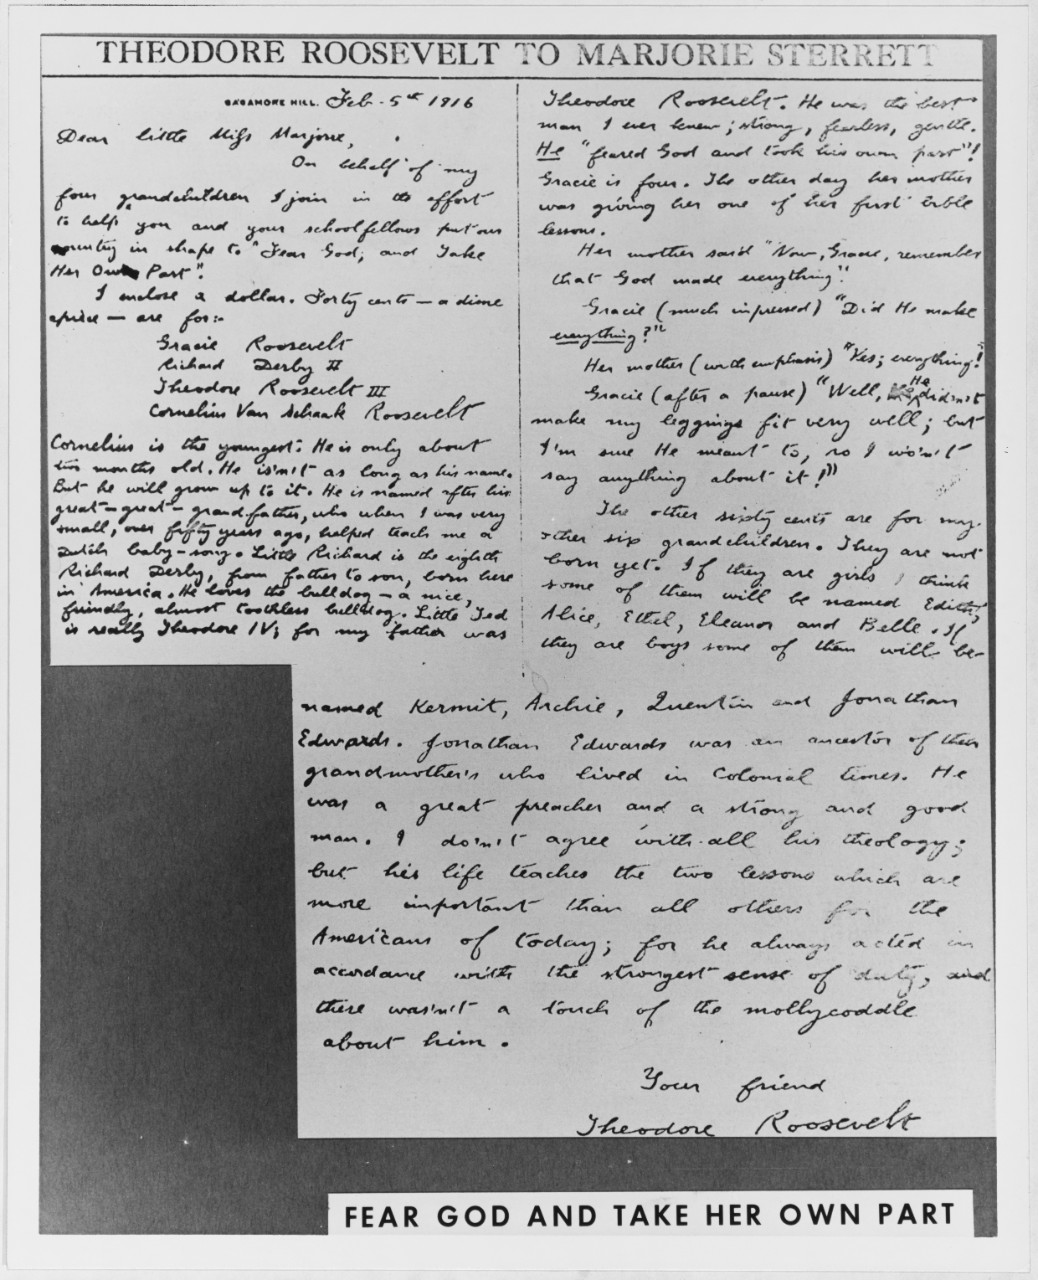 Letter from Theodore Roosevelt to Marjorie Sterrett, 1916